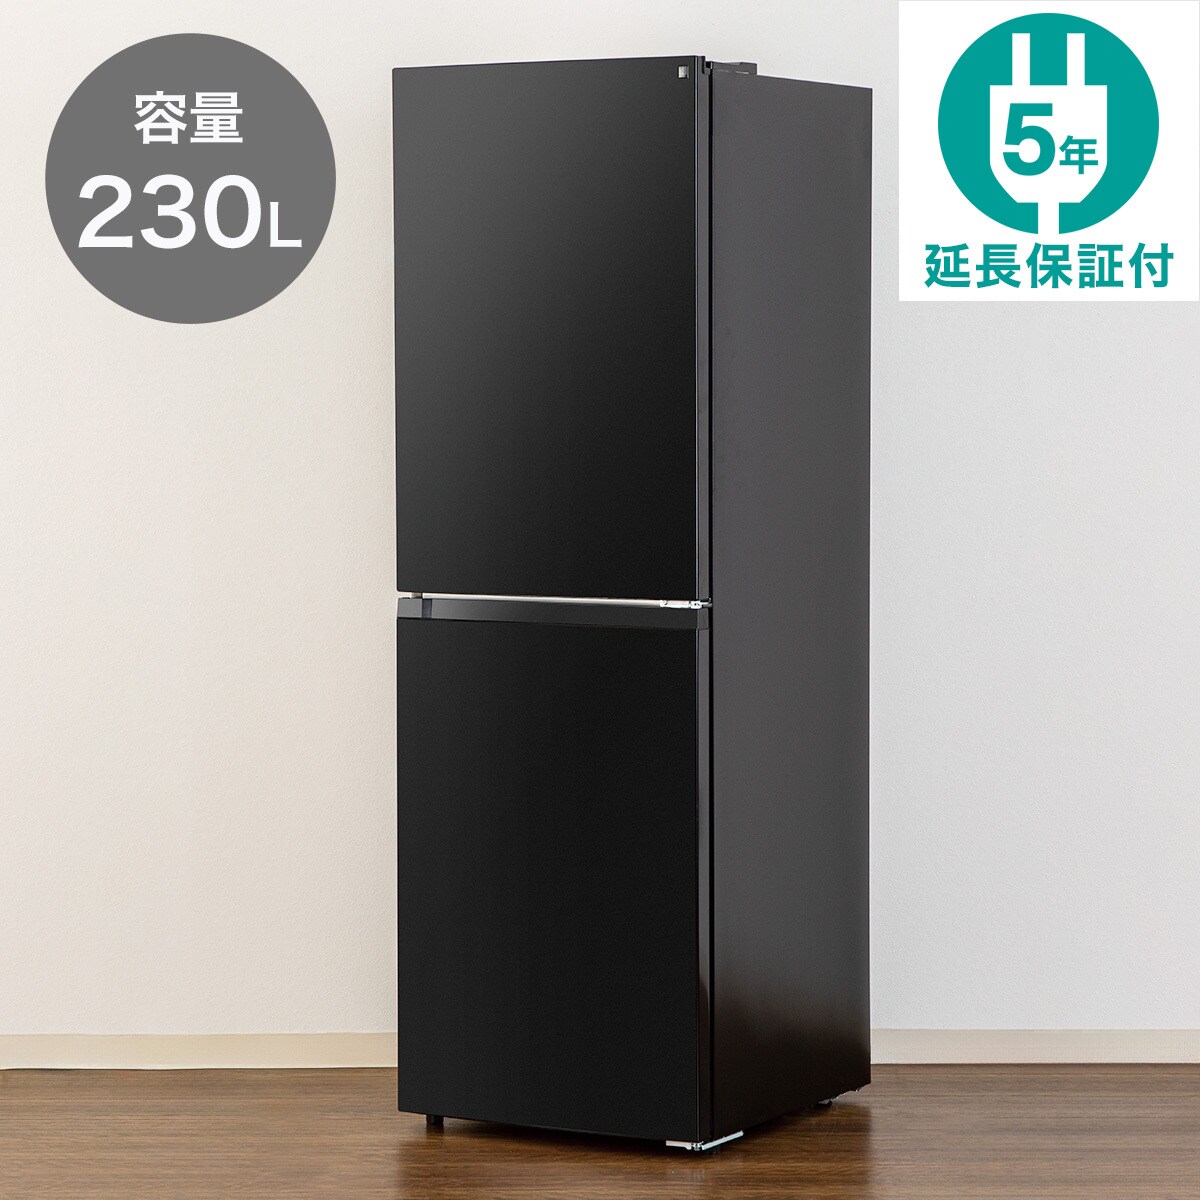 230L 2ドアファン式冷凍冷蔵庫(NR-230F ブラック) 延長保証付き通販 